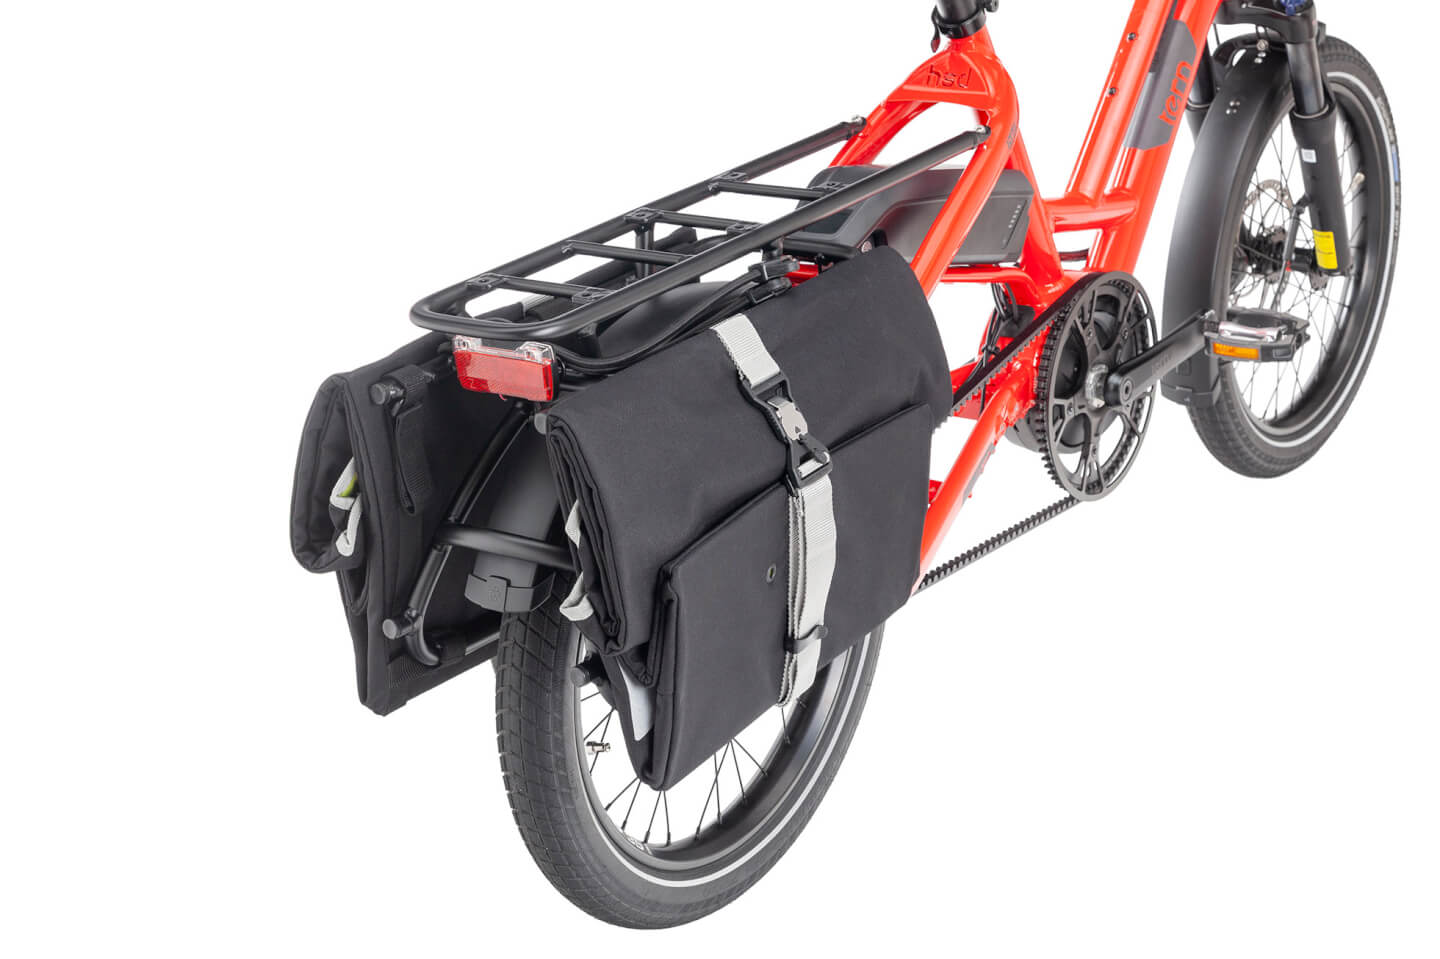 tern cargo bike